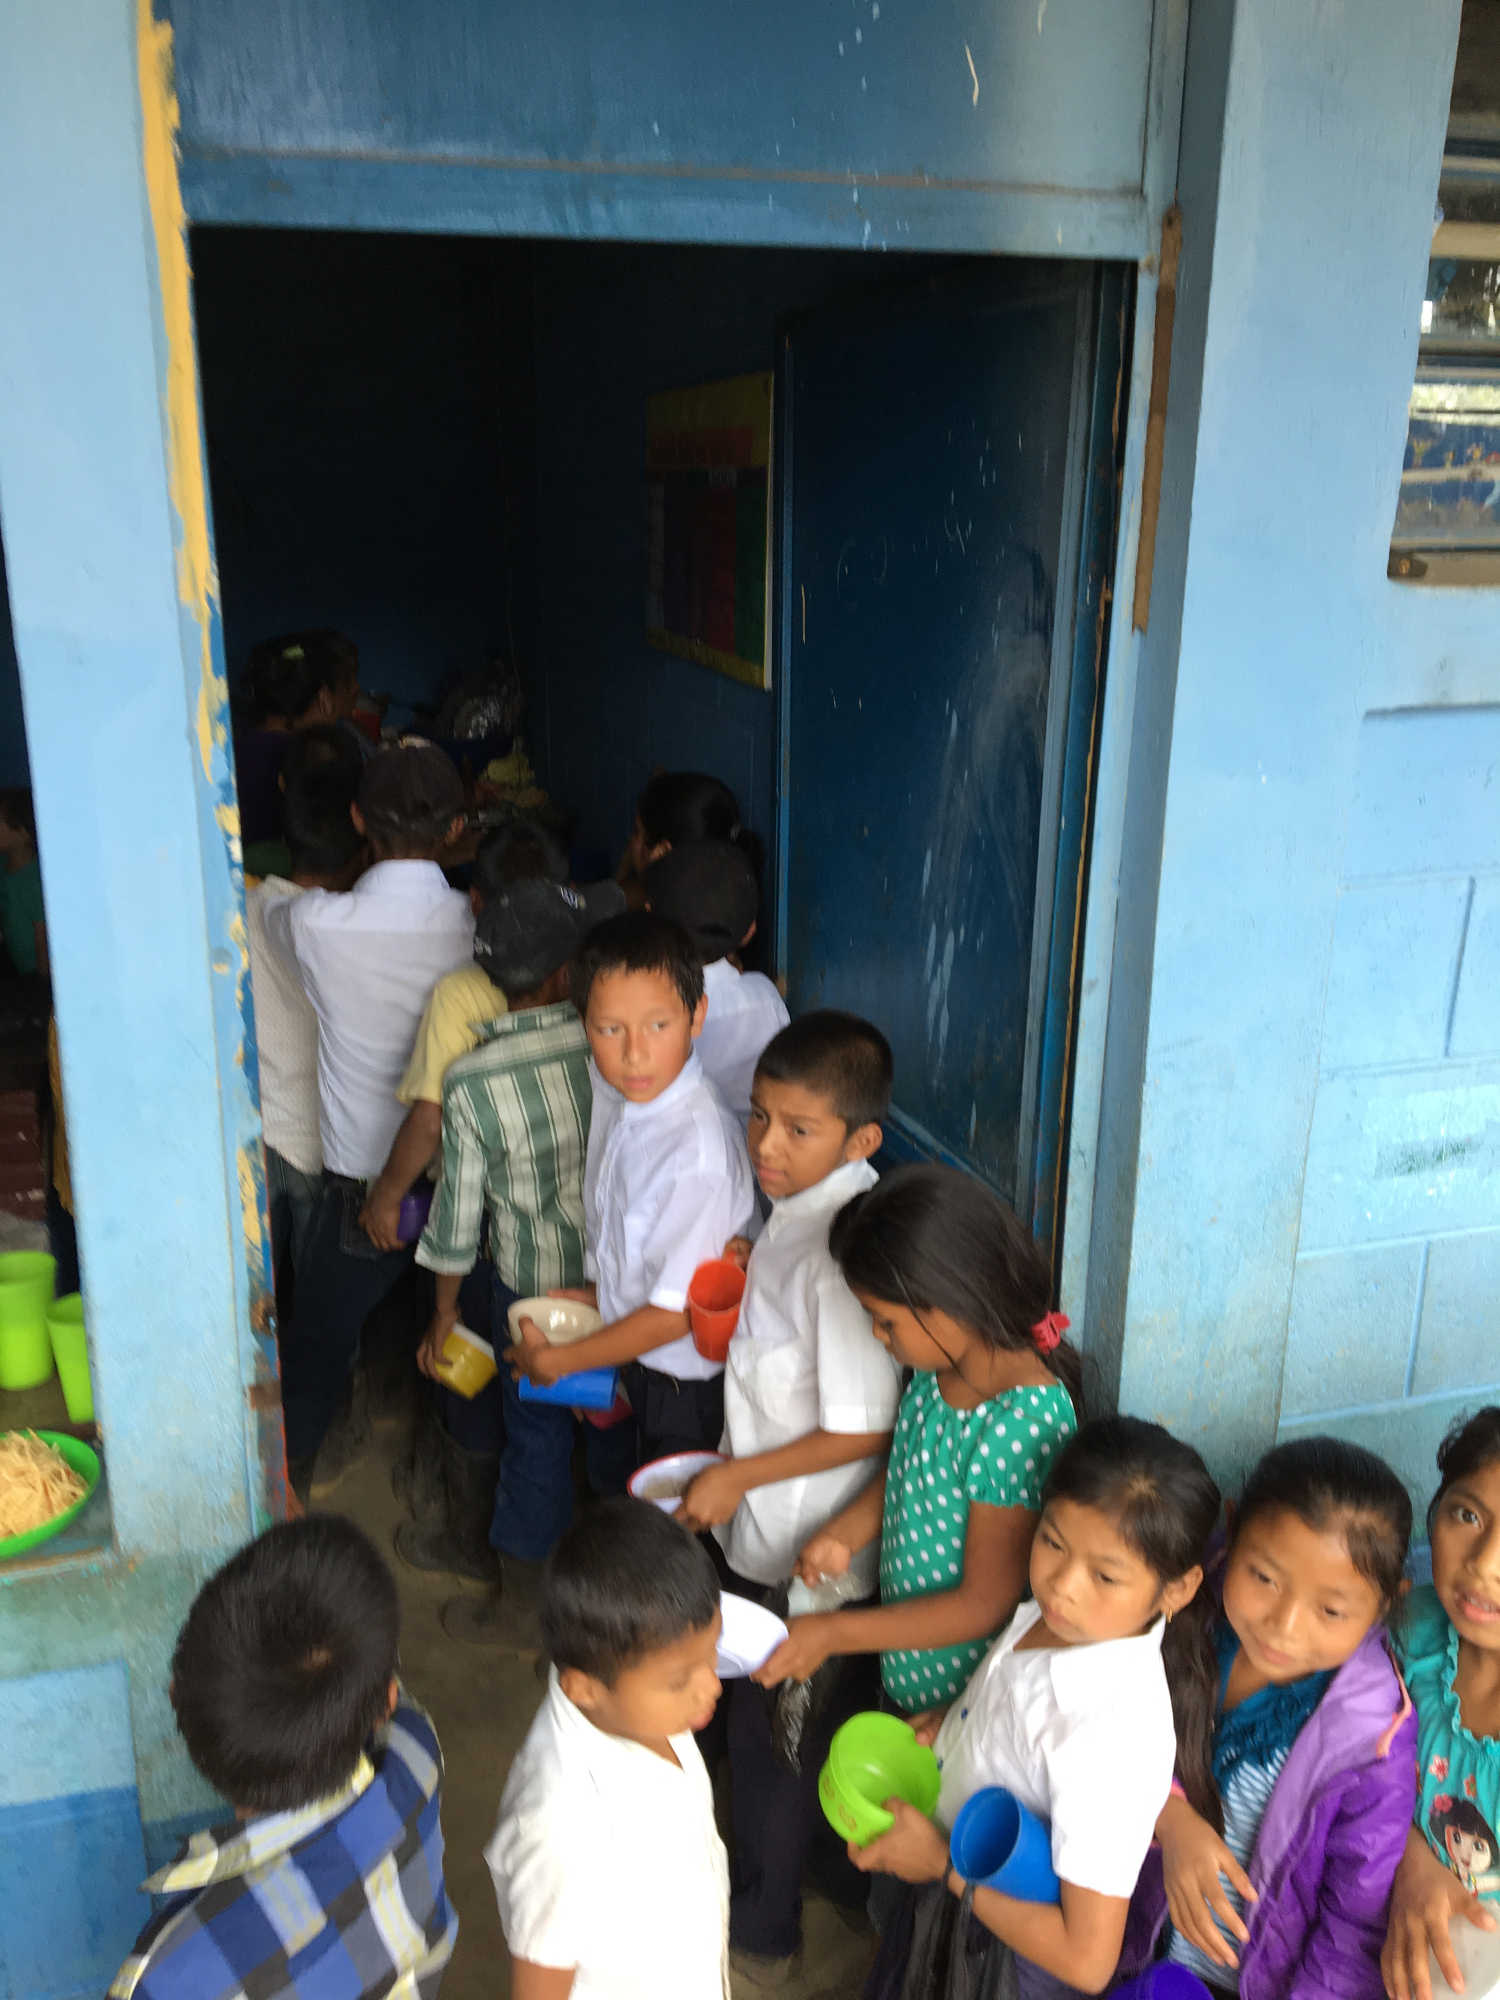 Children in Olopa, Guatemala